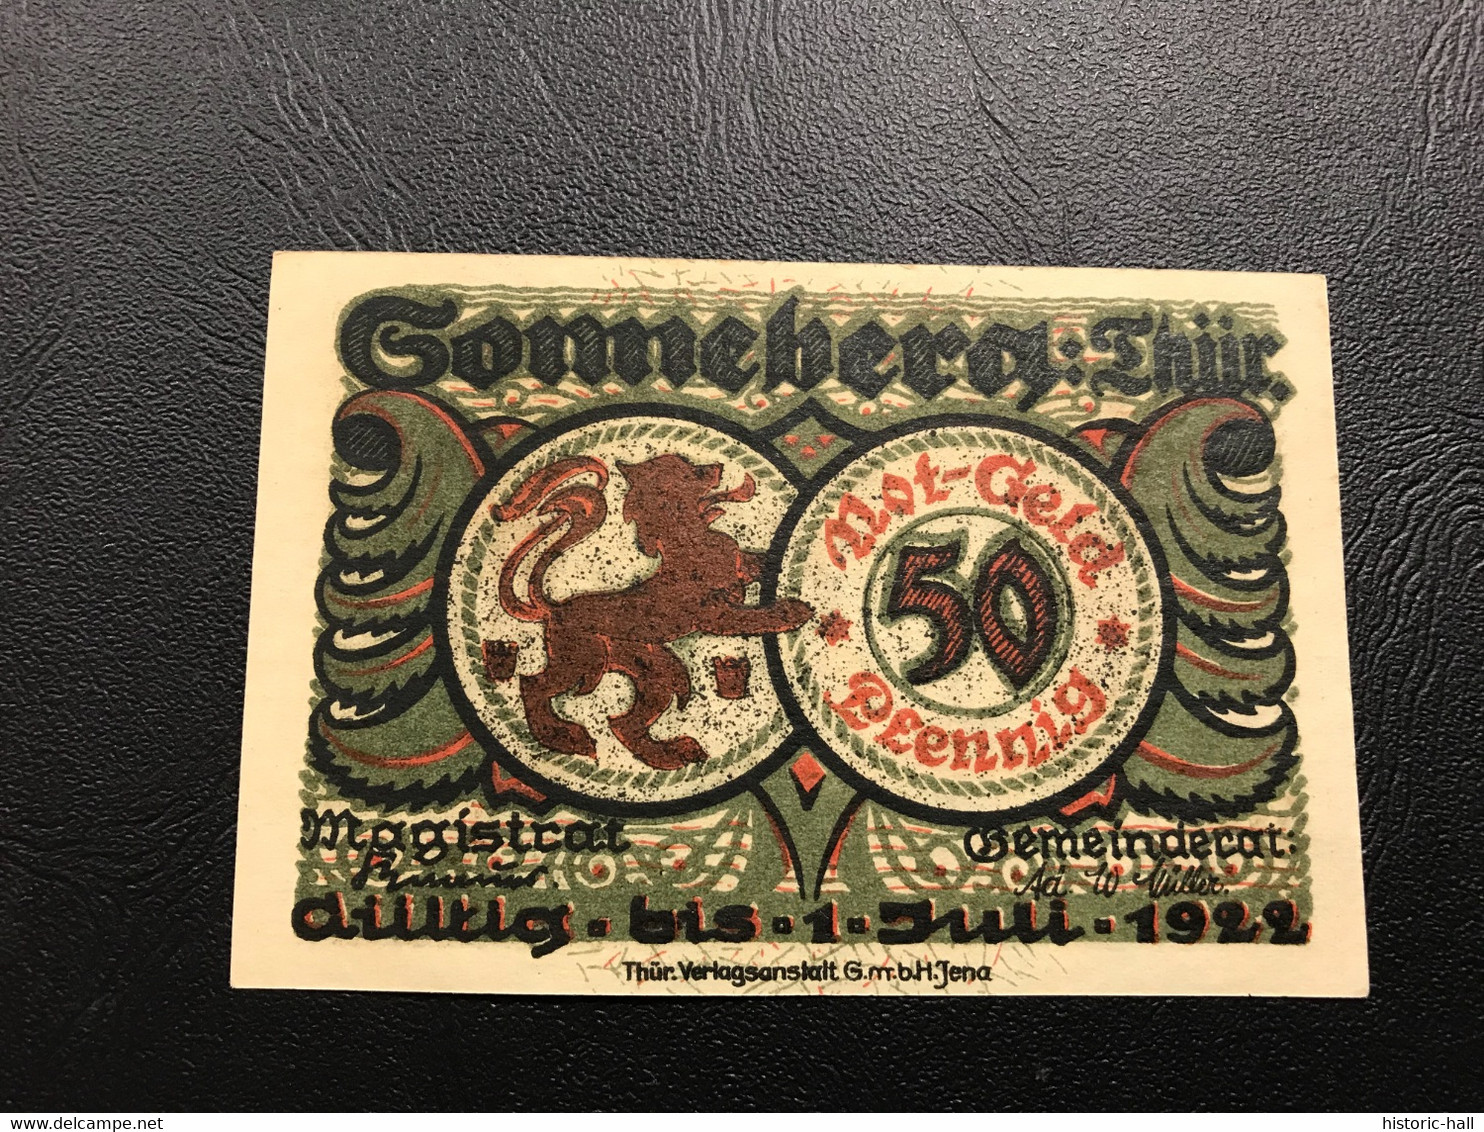 Notgeld - Billet Necéssité Allemagne - 50 Pfennig - Sonneberg - 1 Juillet 1922 - Zonder Classificatie